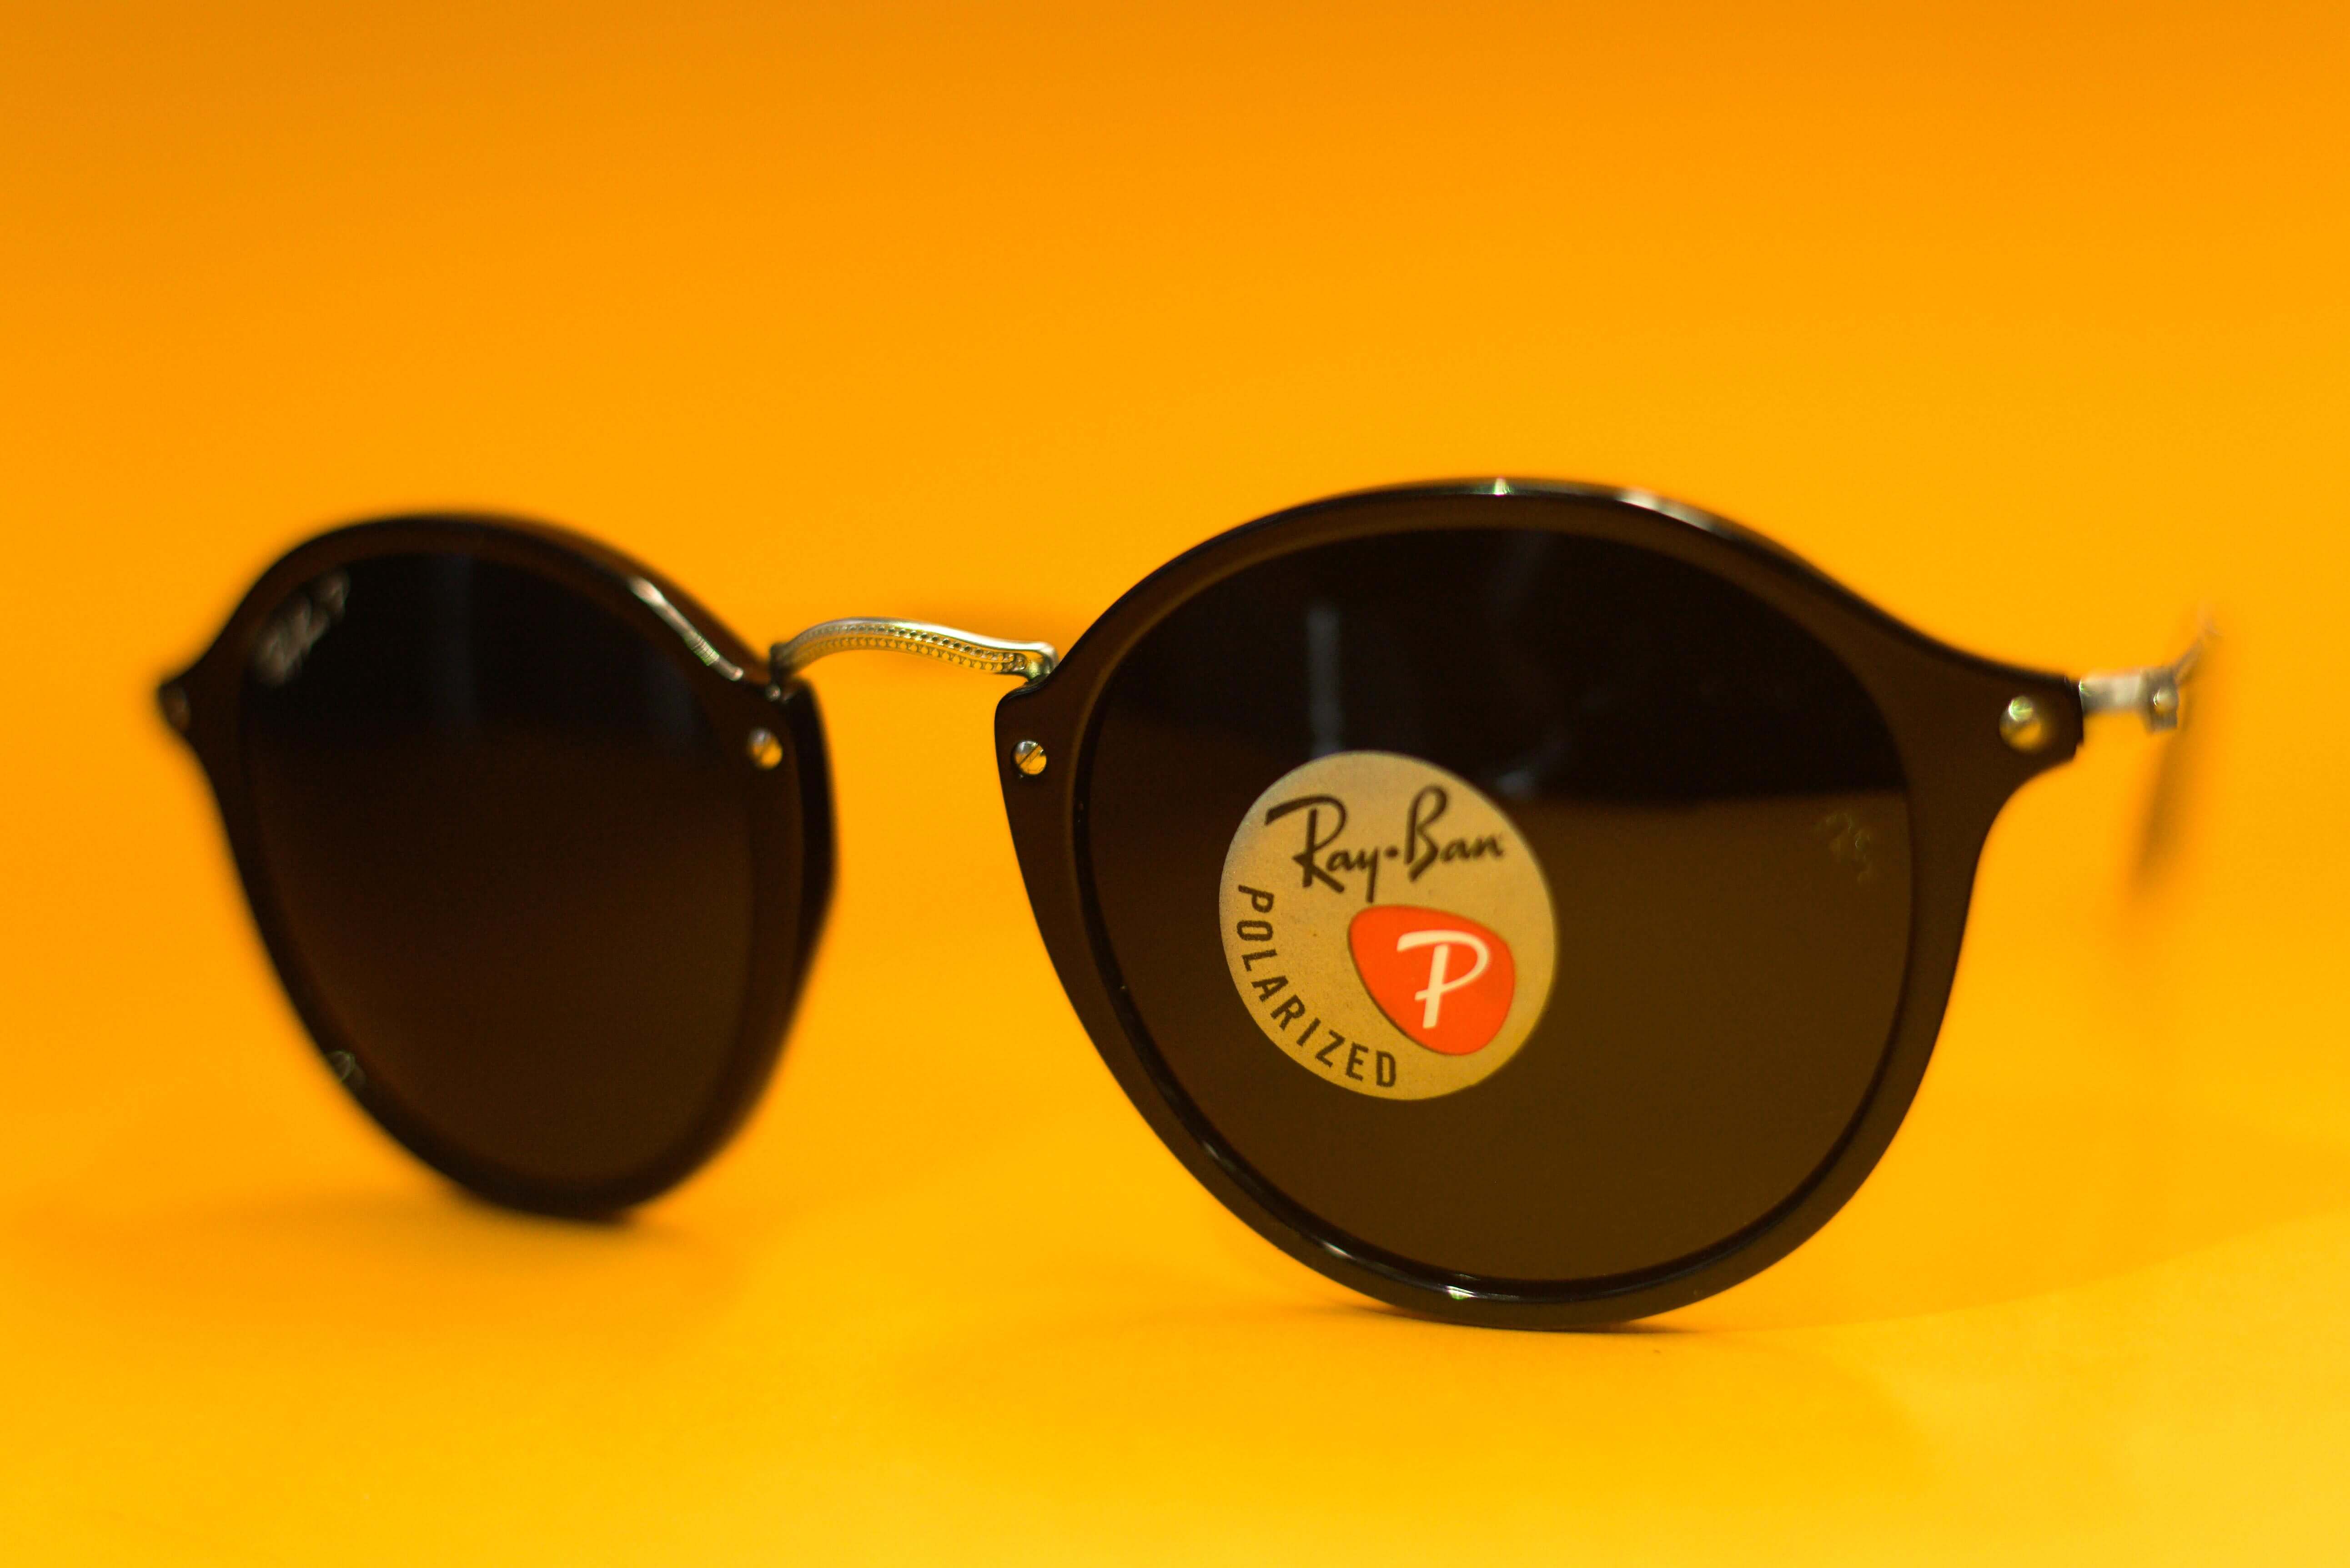 New cheap ray ban look alike sunglasses free shiping